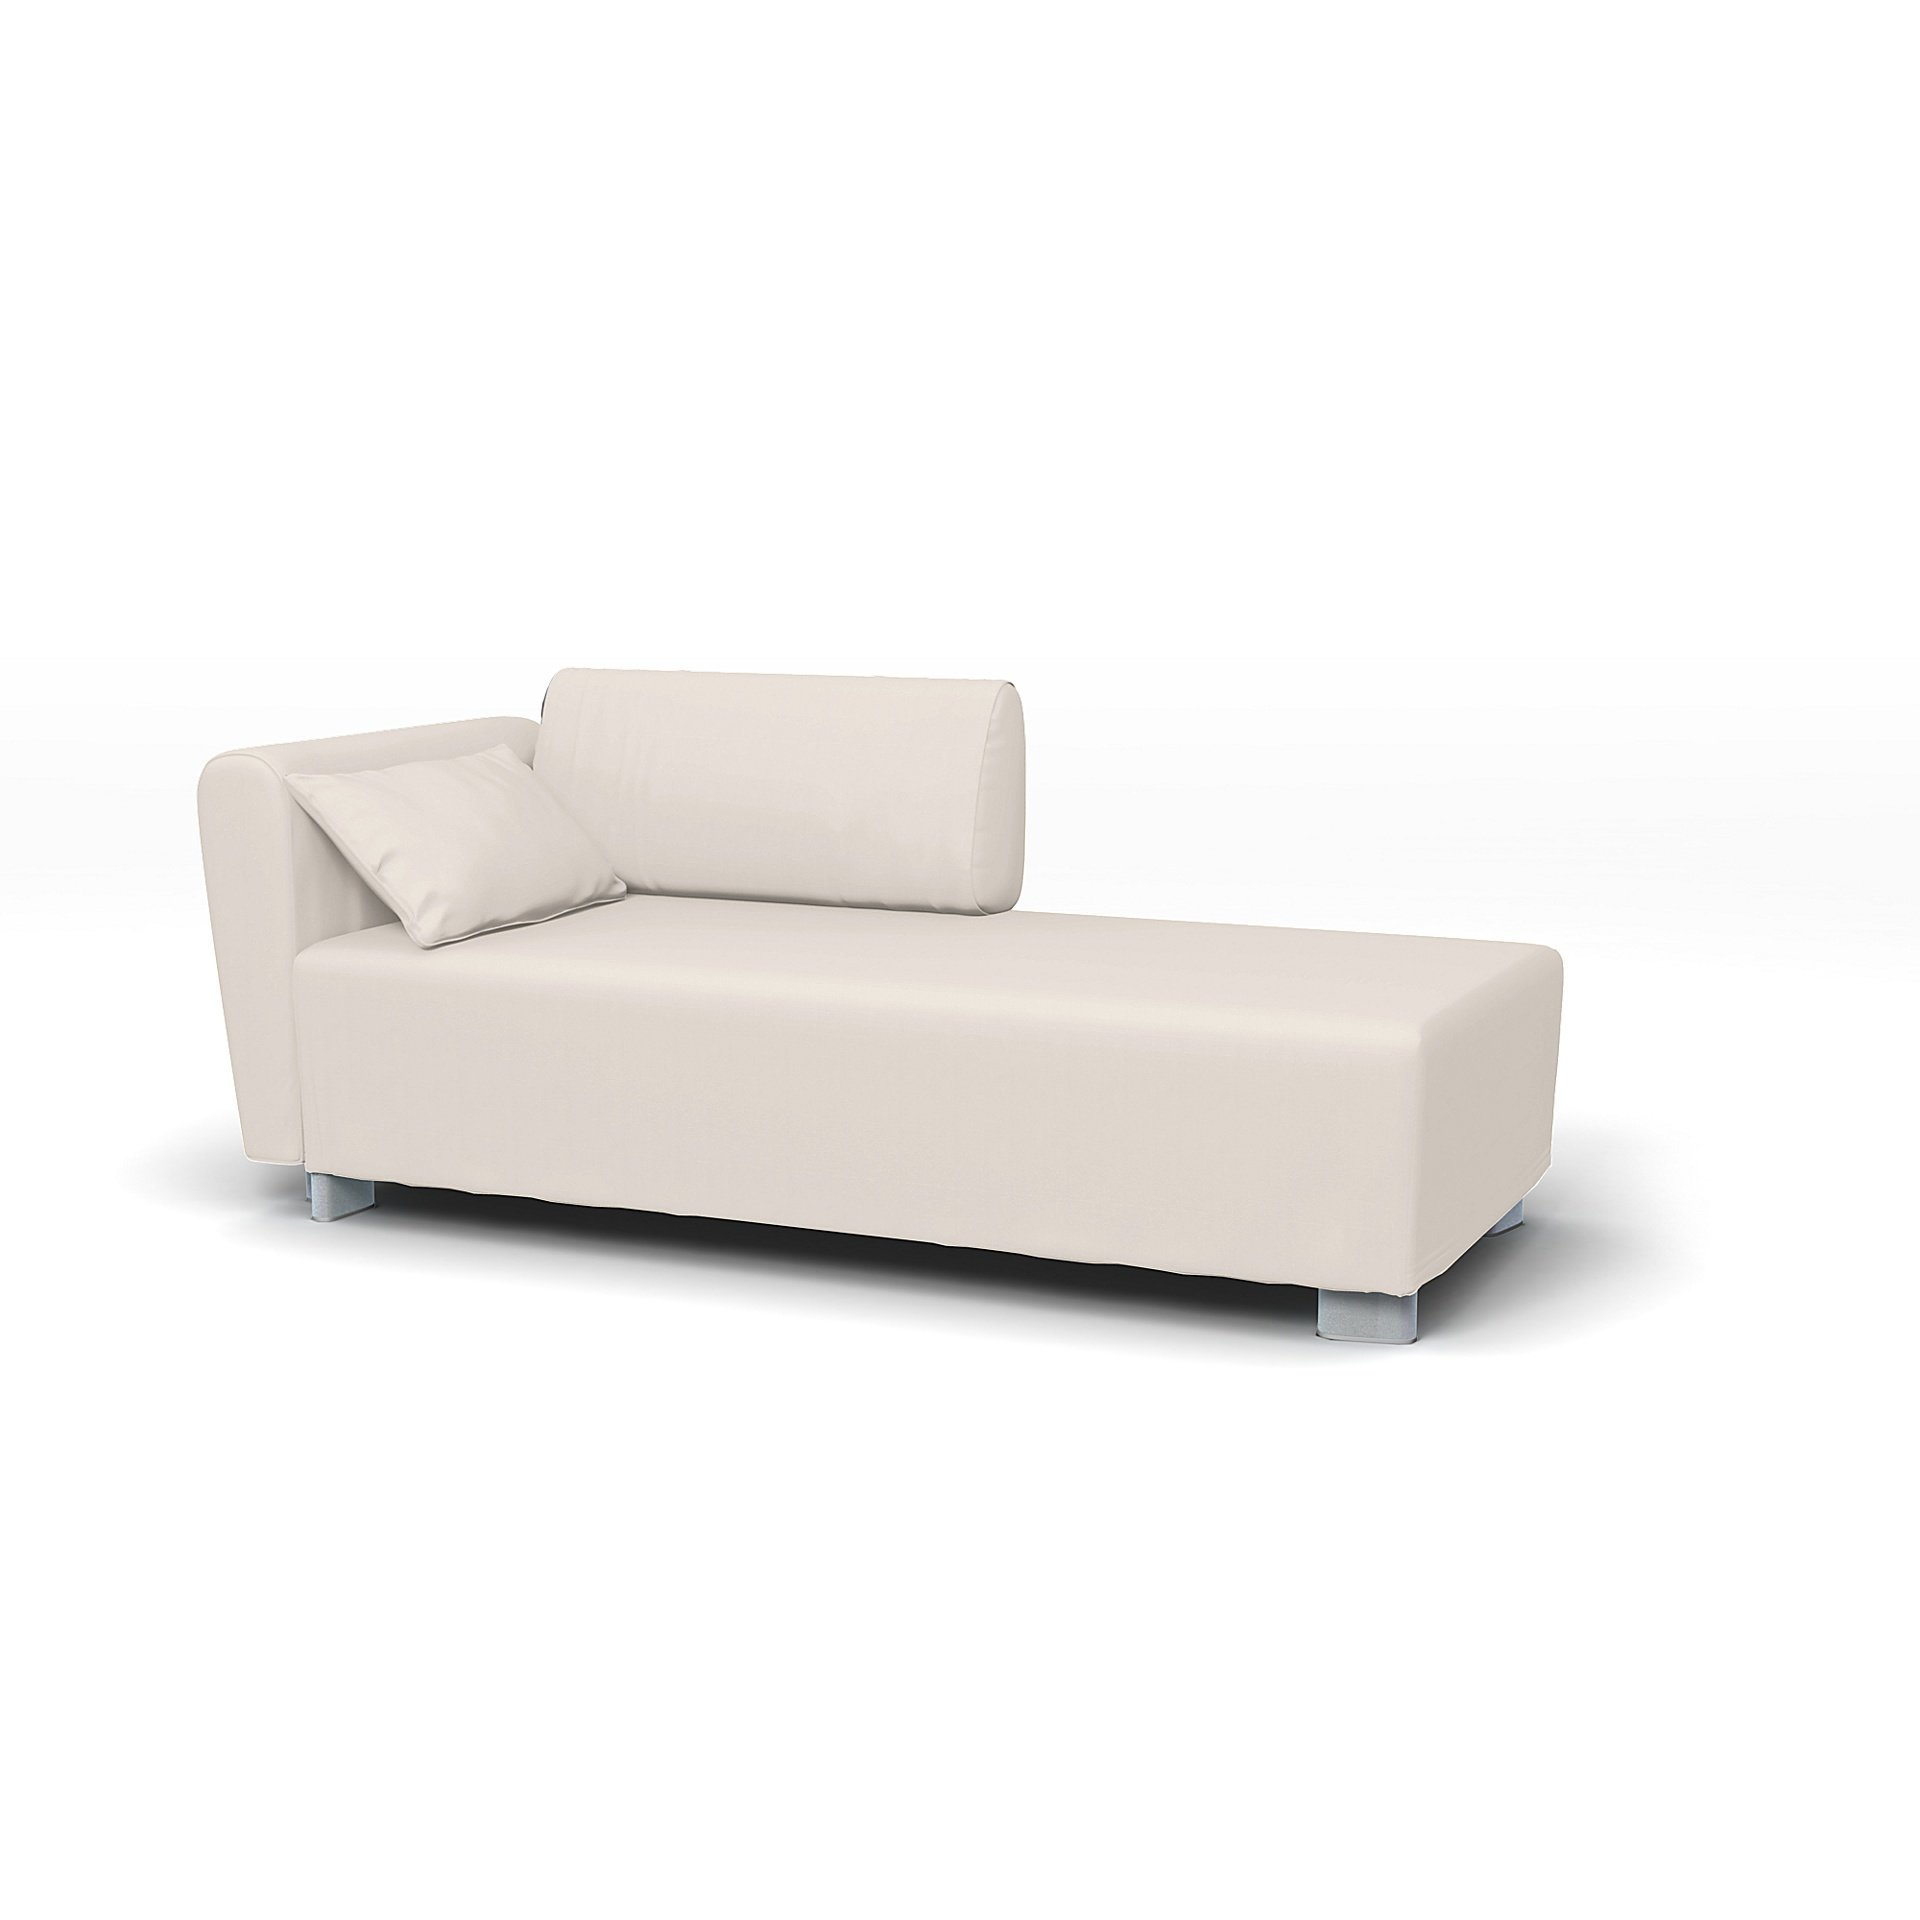 IKEA - Mysinge Chaise Longue with Armrest Cover, Soft White, Cotton - Bemz